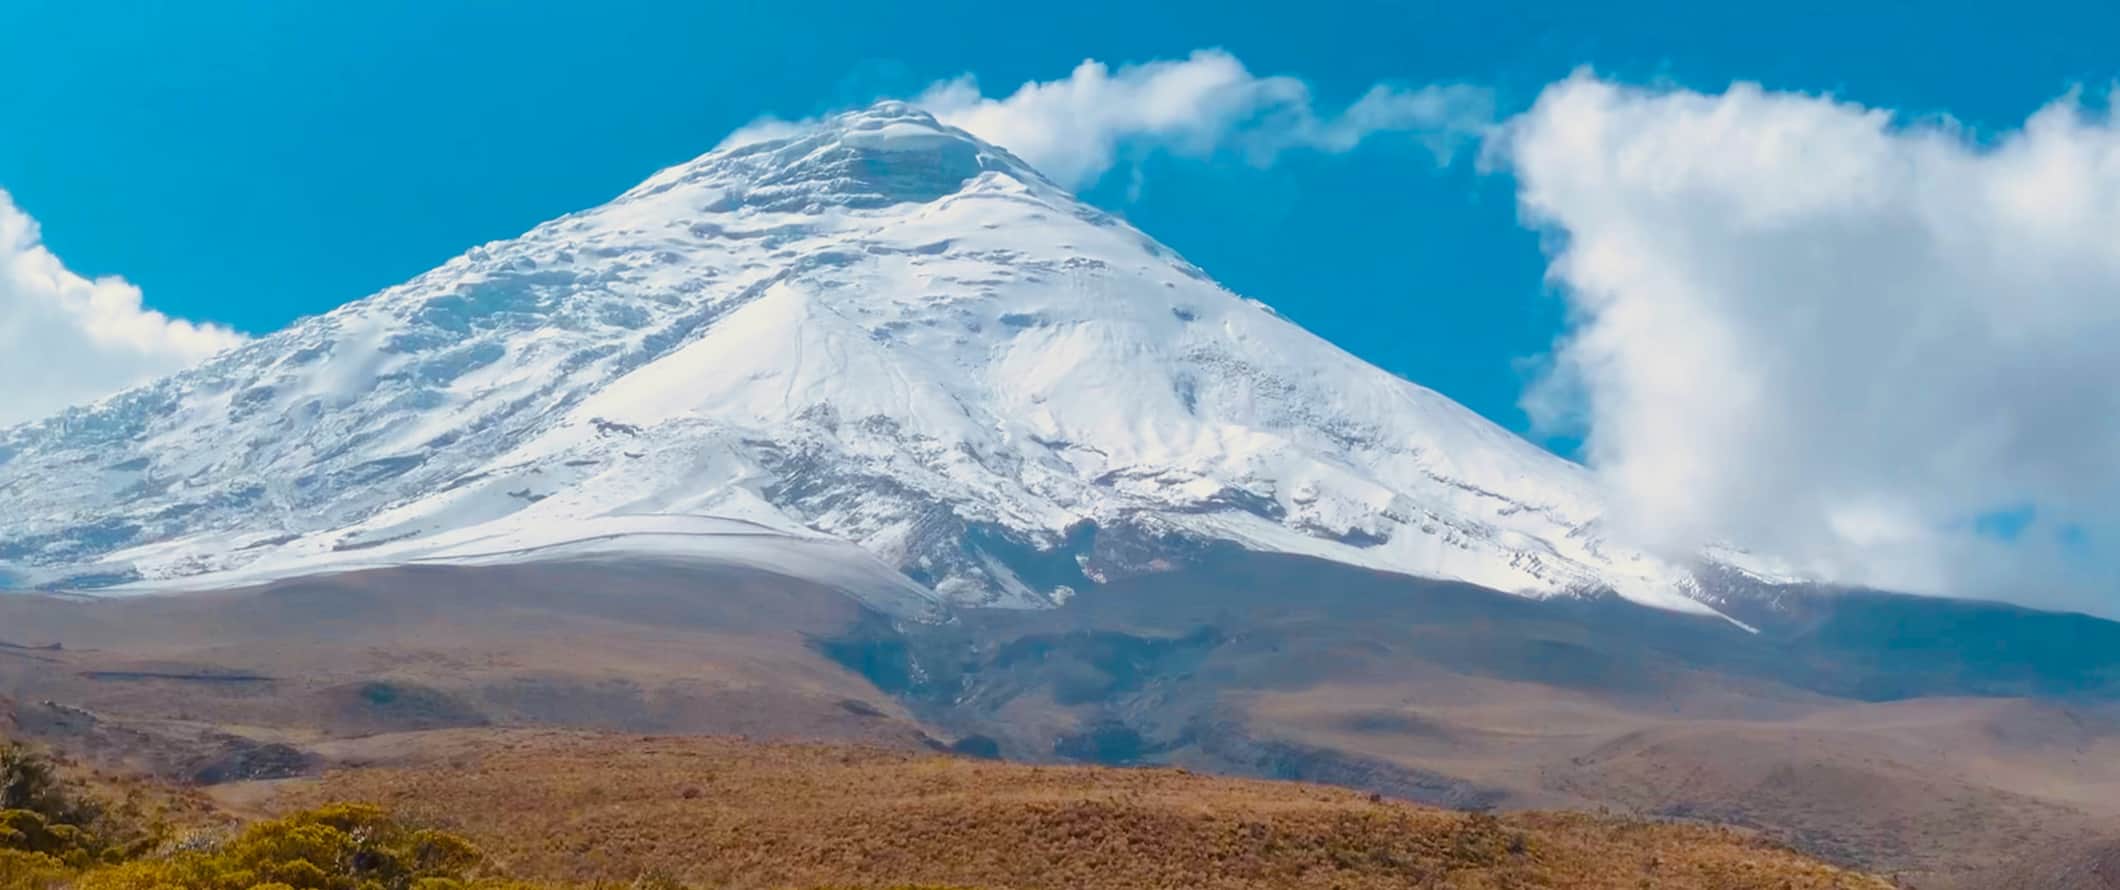 Cotopaxi, a towering snow-capped mountain in beautiful Ecuador